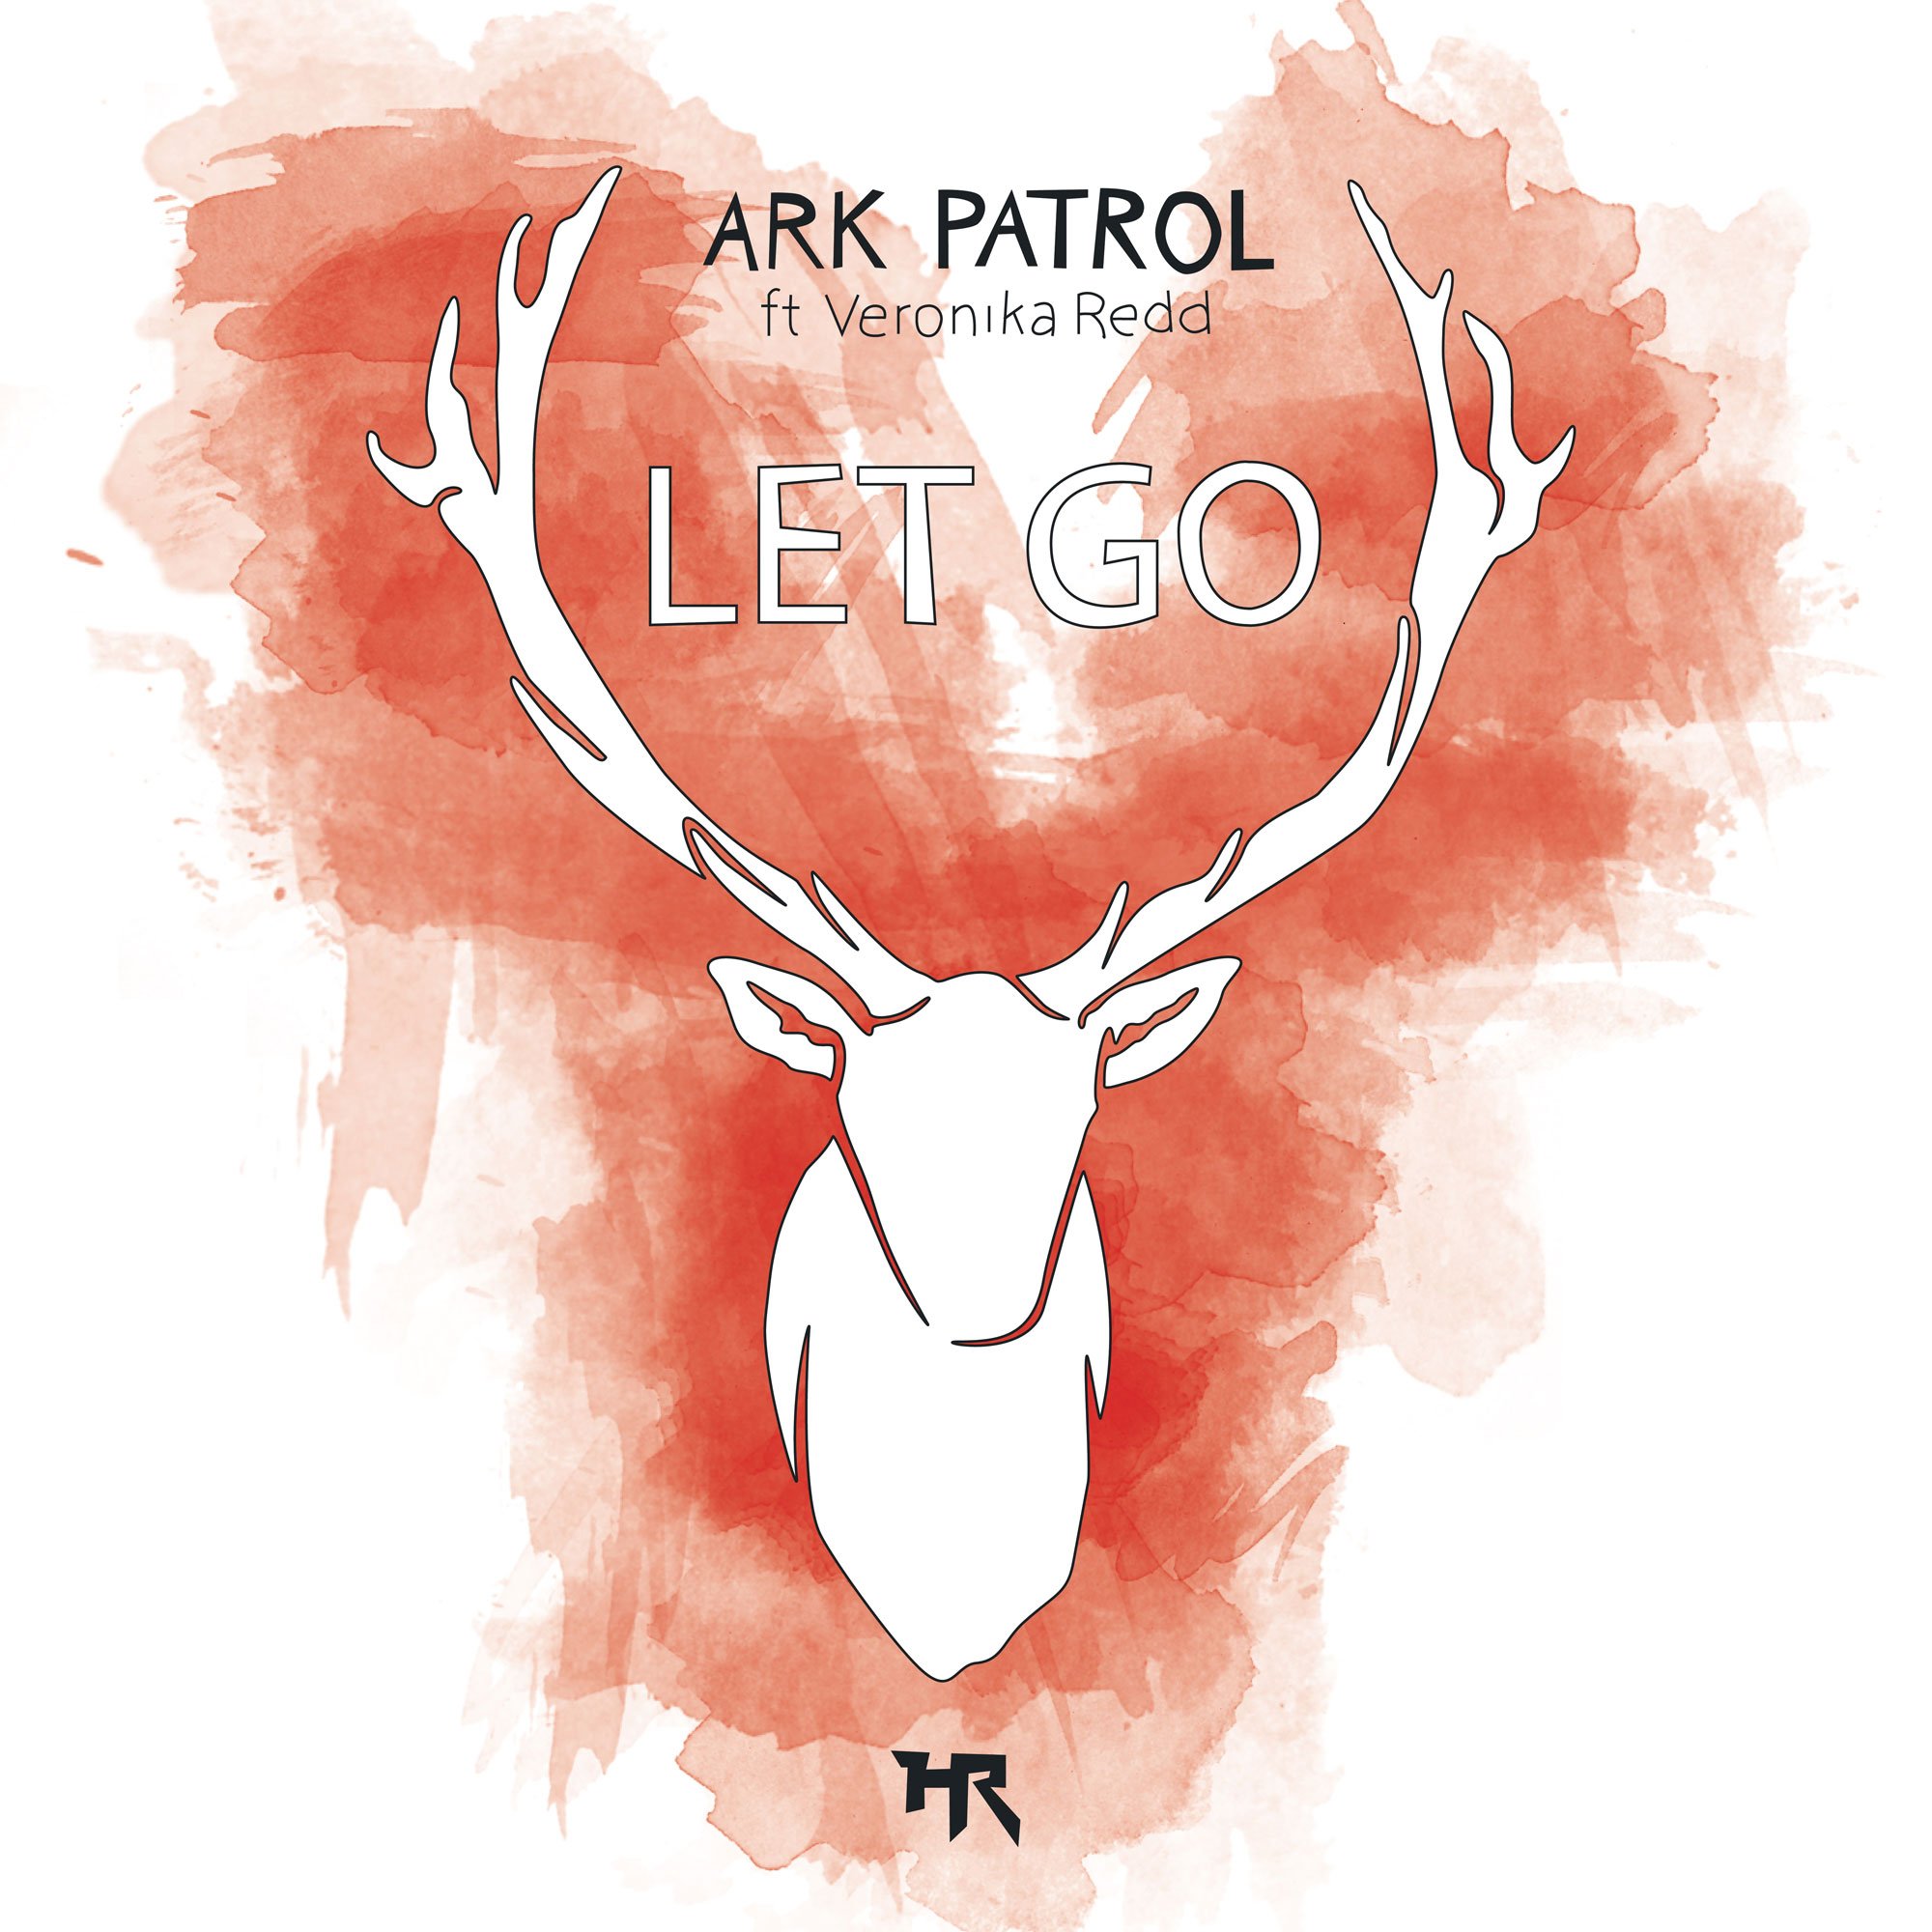 Let go reverb. Let go Ark Patrol. Песня Let go Ark Patrol. Let go Ark Patrol Veronika.